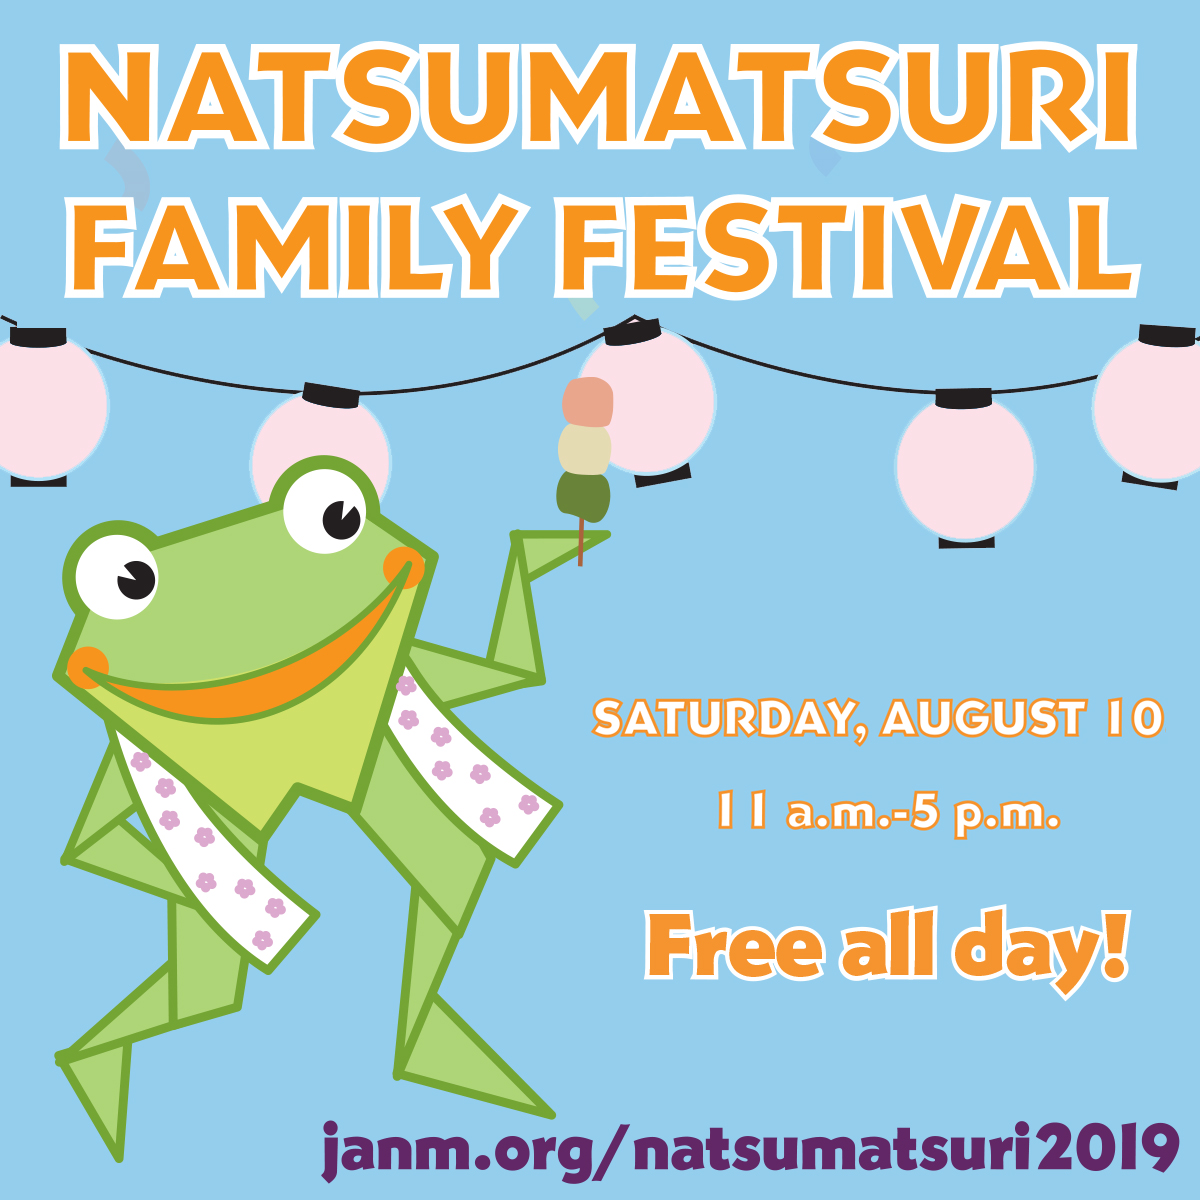 JANM's 2019 Natsumatsuri Family Festival